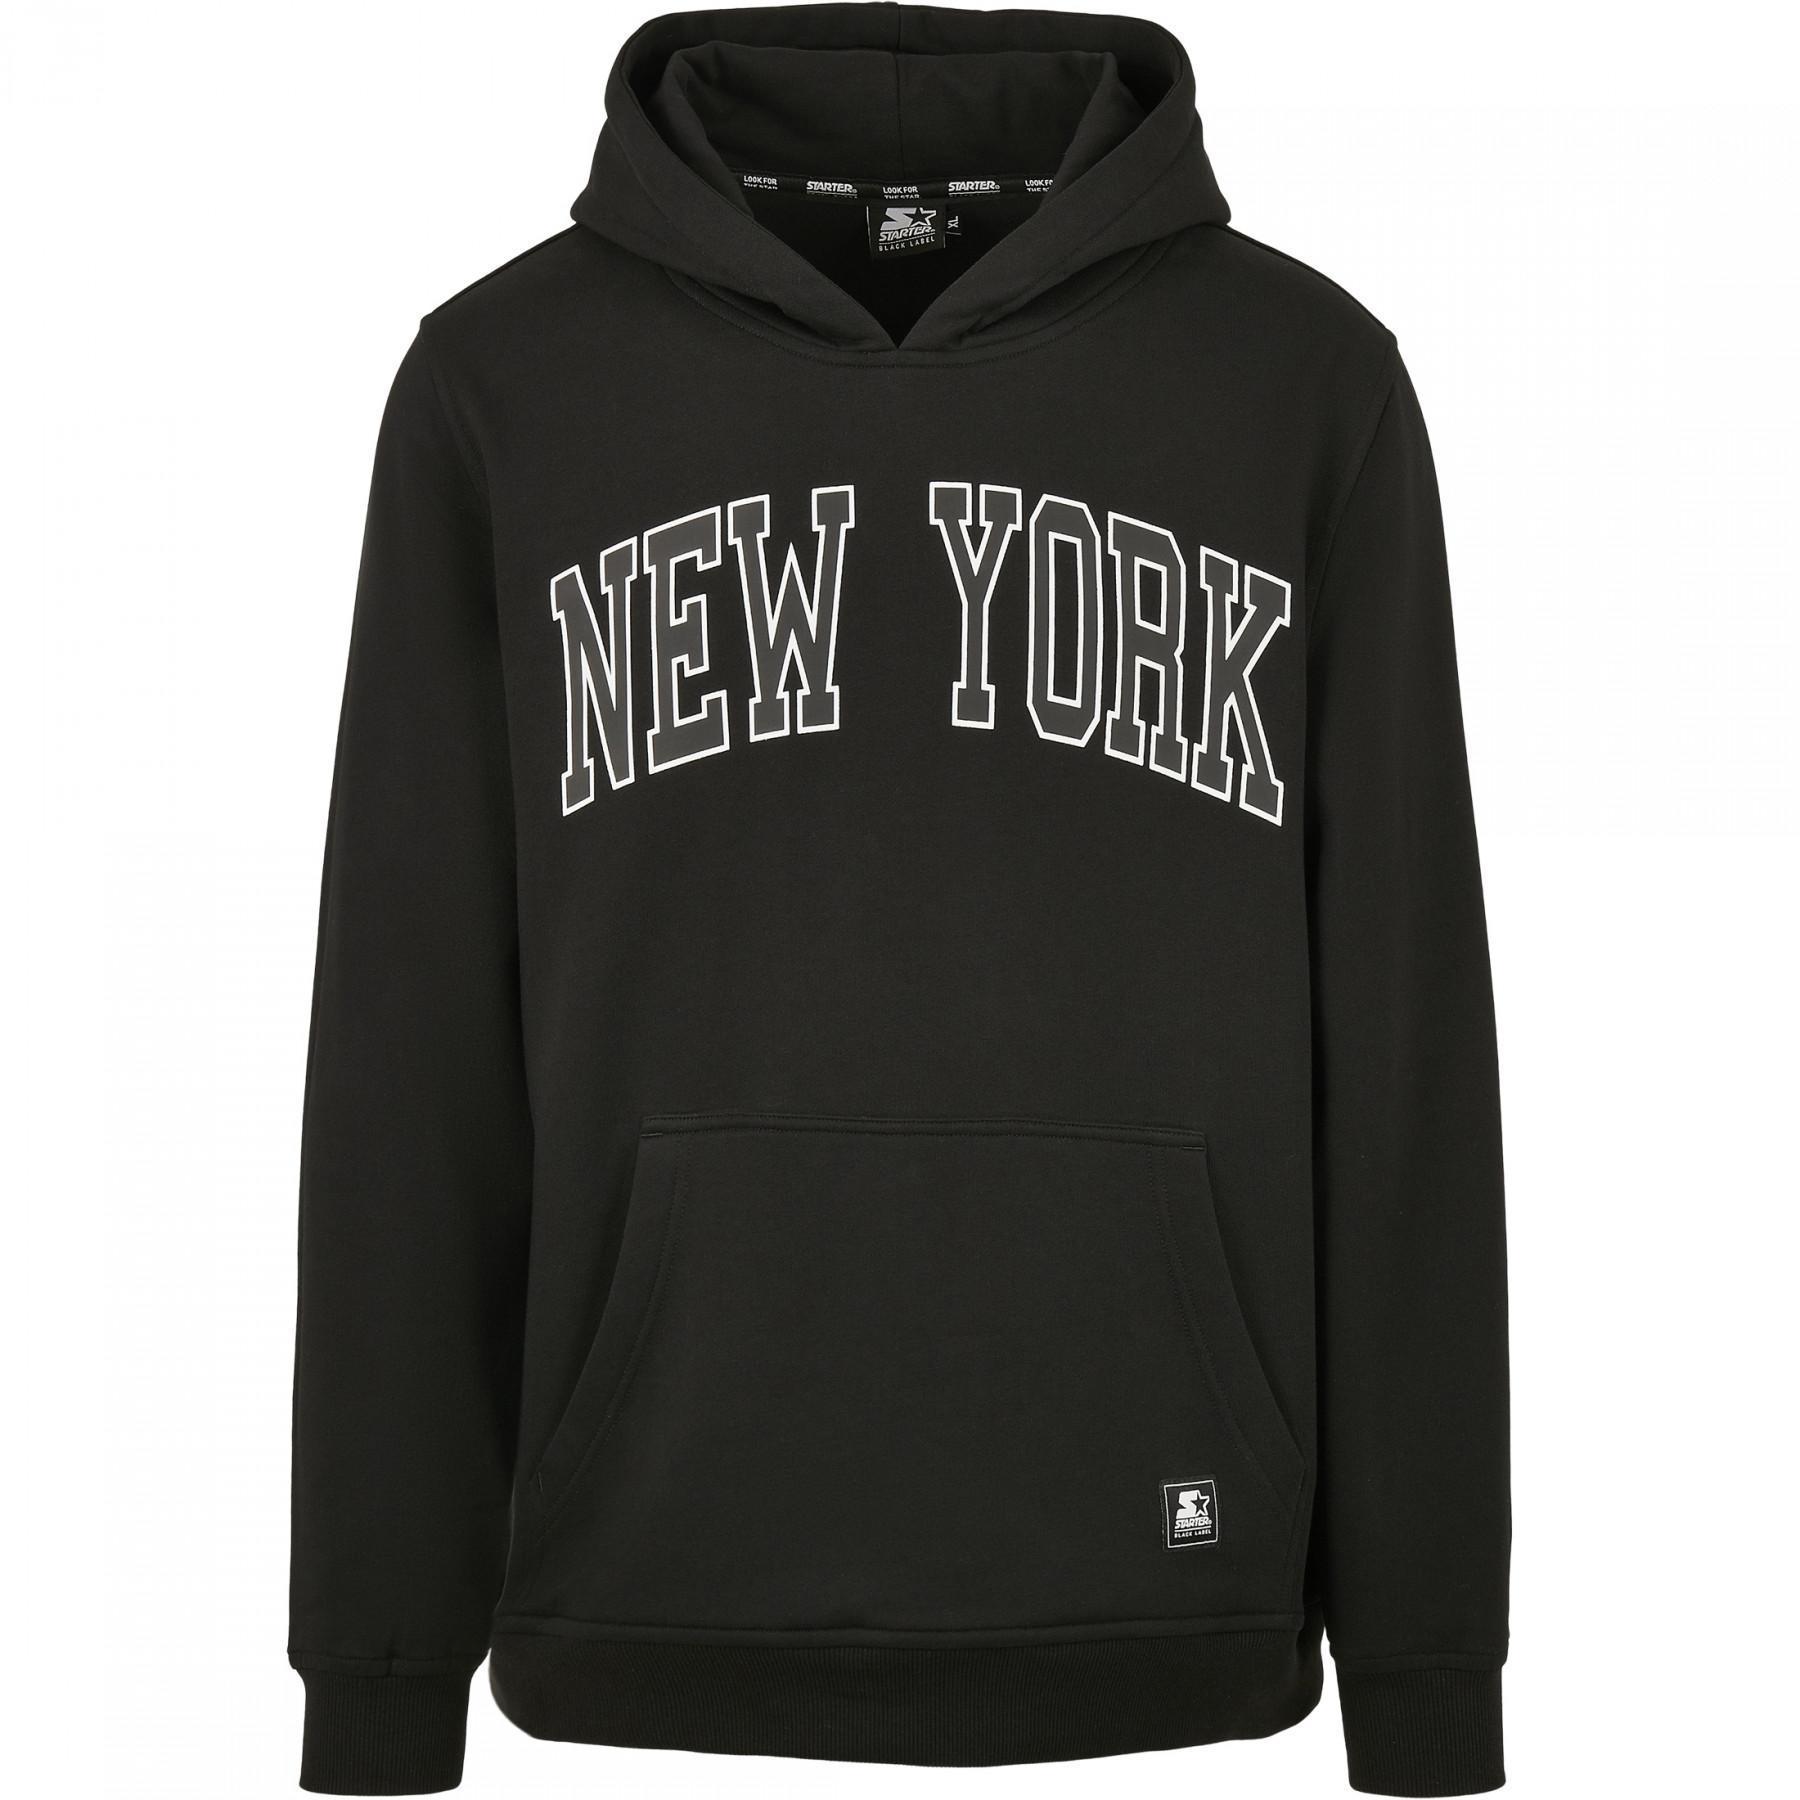 Hooded sweatshirt Urban Classics starter new york